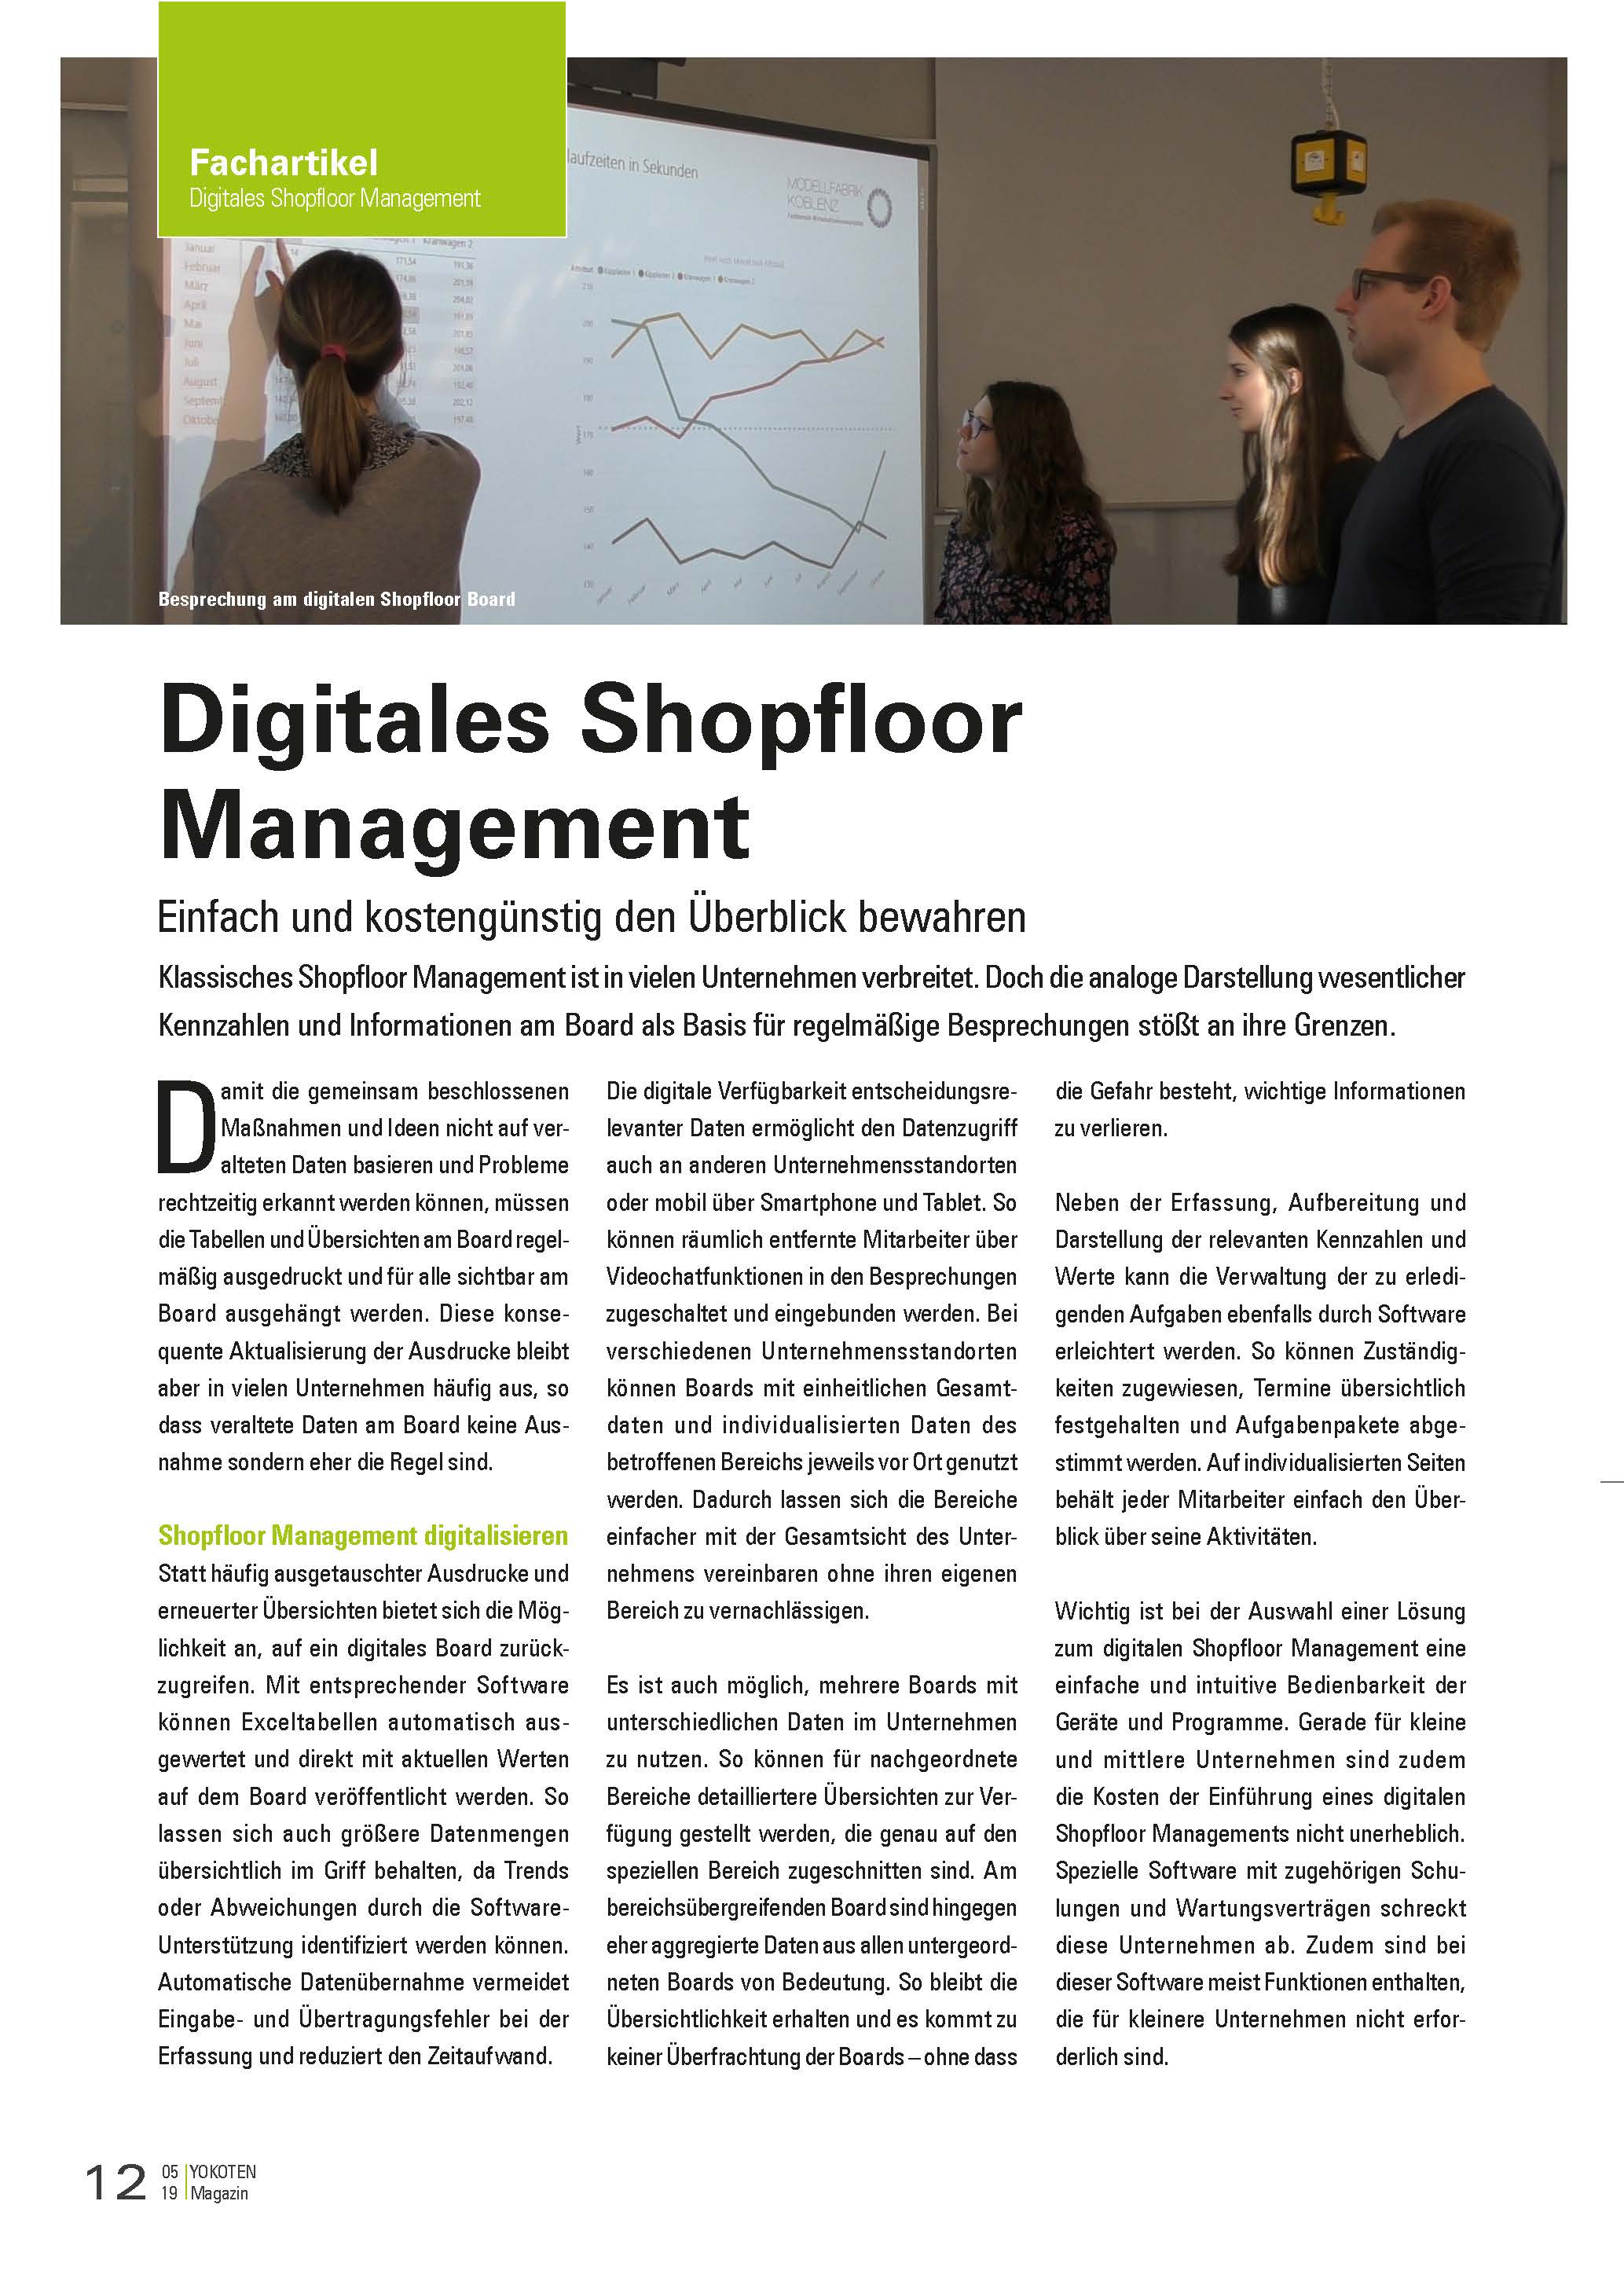 Digitales Shopfloor Management - Artikel aus Fachmagazin YOKOTEN 2019-05